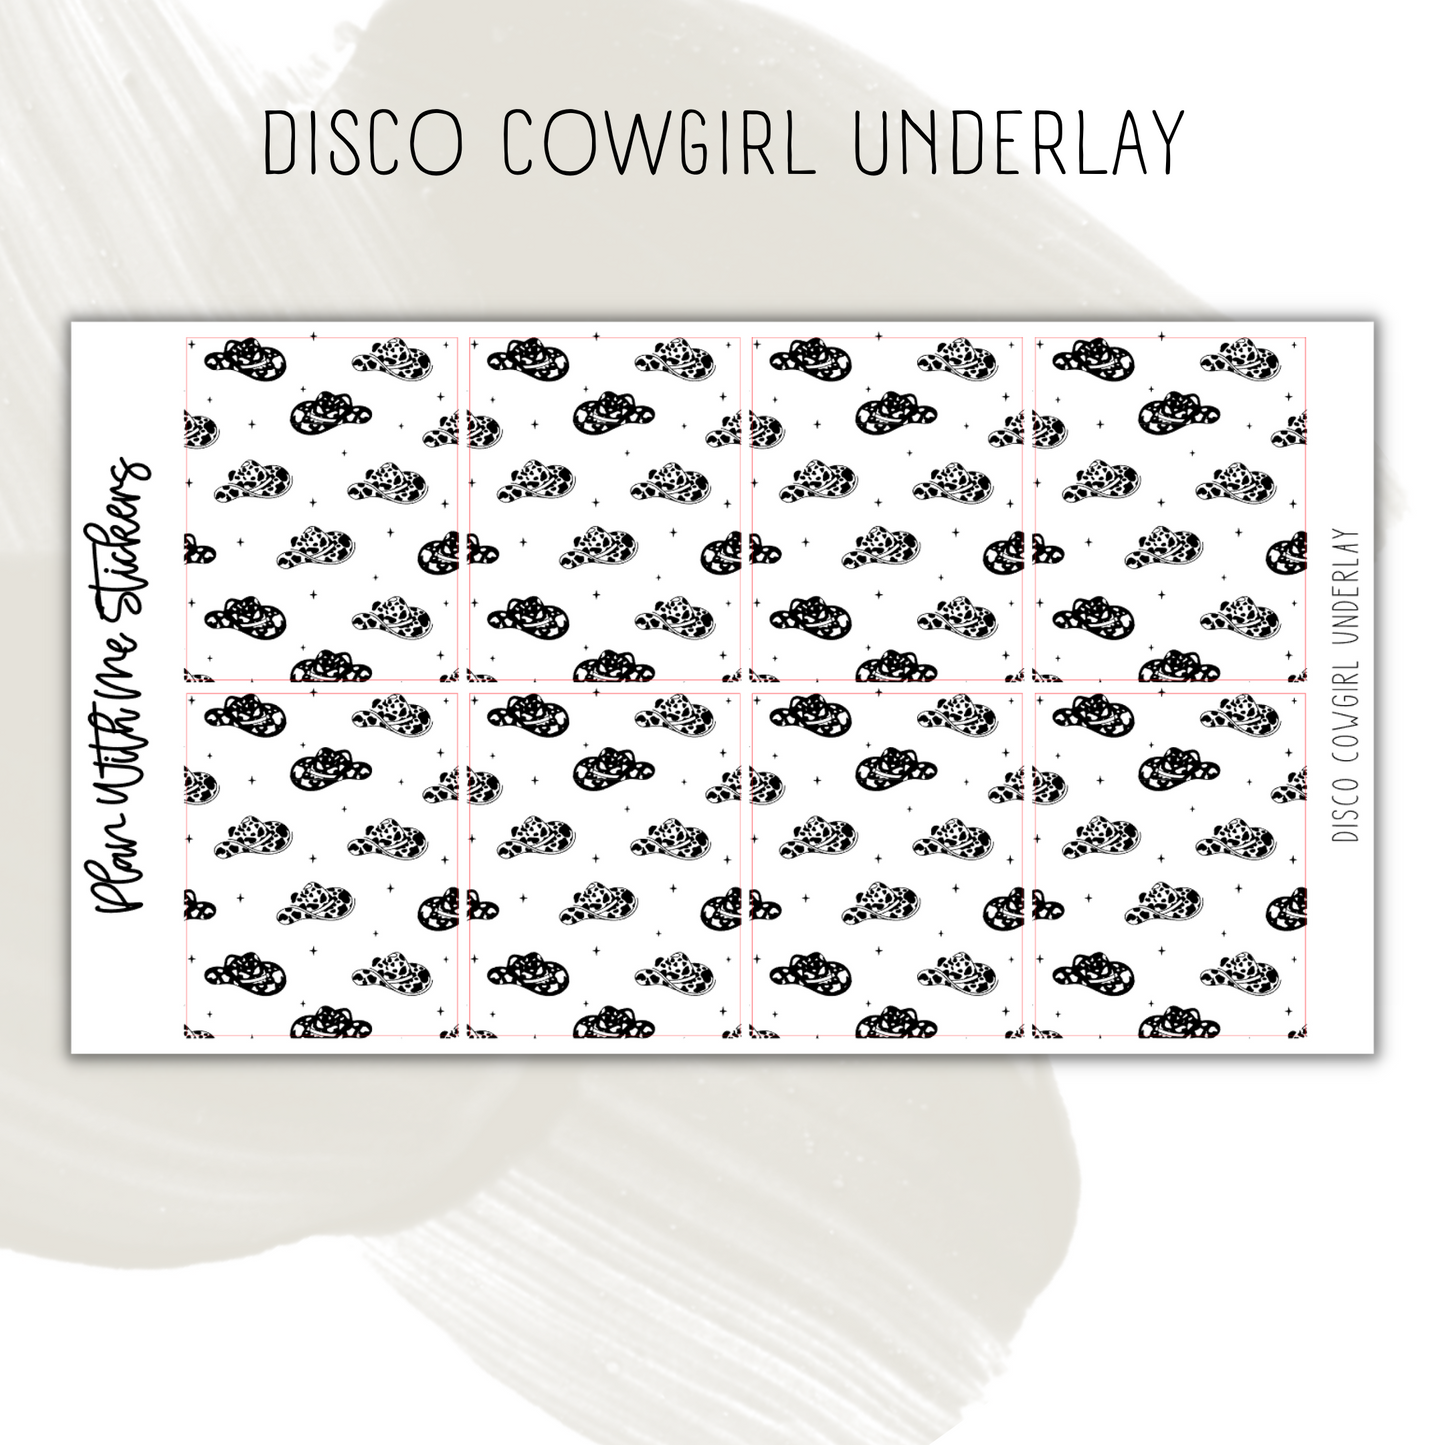 Disco Cowgirl Underlay